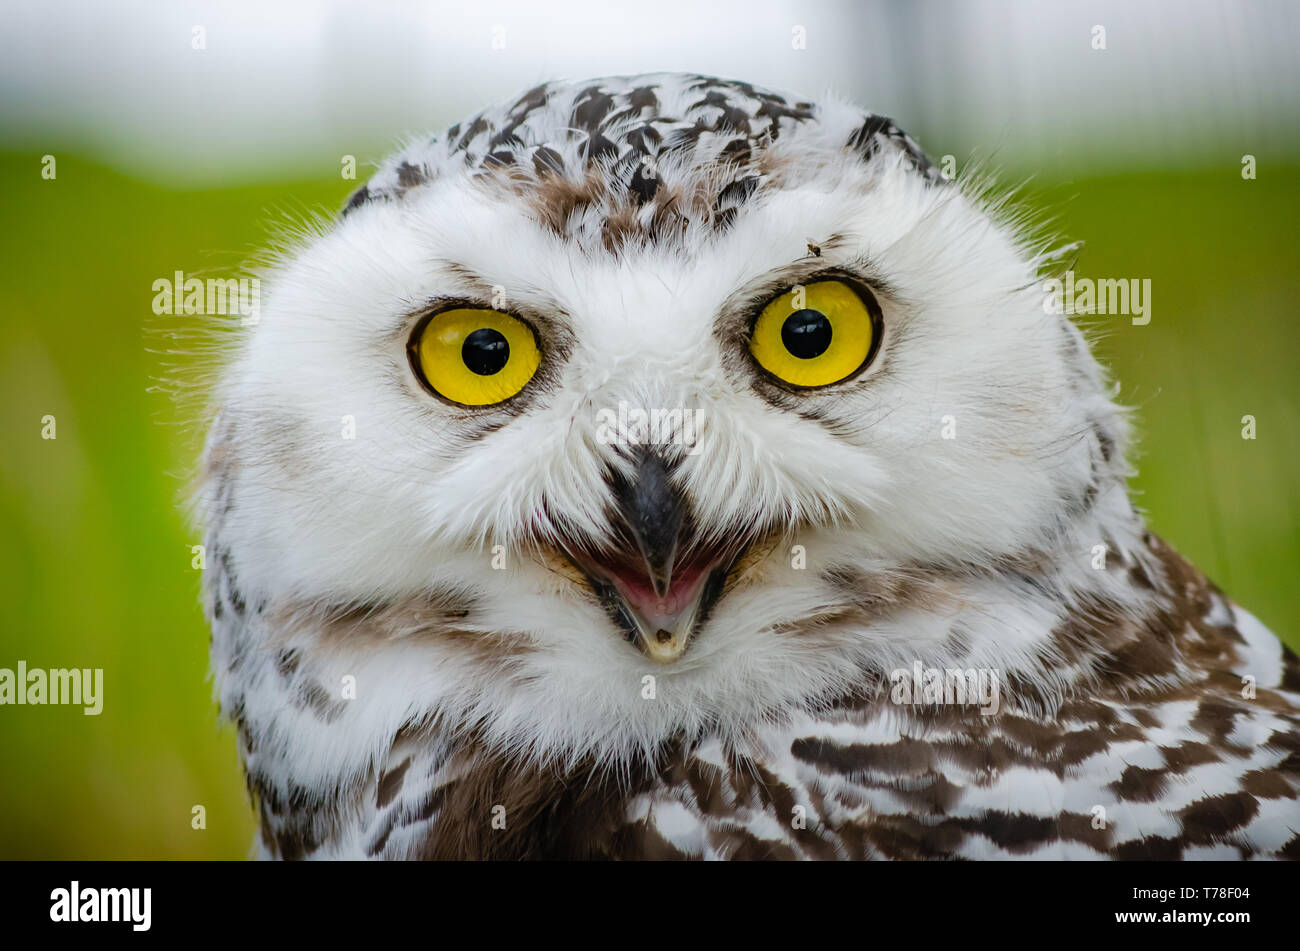 This image of a Snowy Owl (Bubo Scandiacus) was taken at Kingussie Highland Wildlife Park, Scotland.  The bird has impressive and mesmerising eyes. Stock Photo